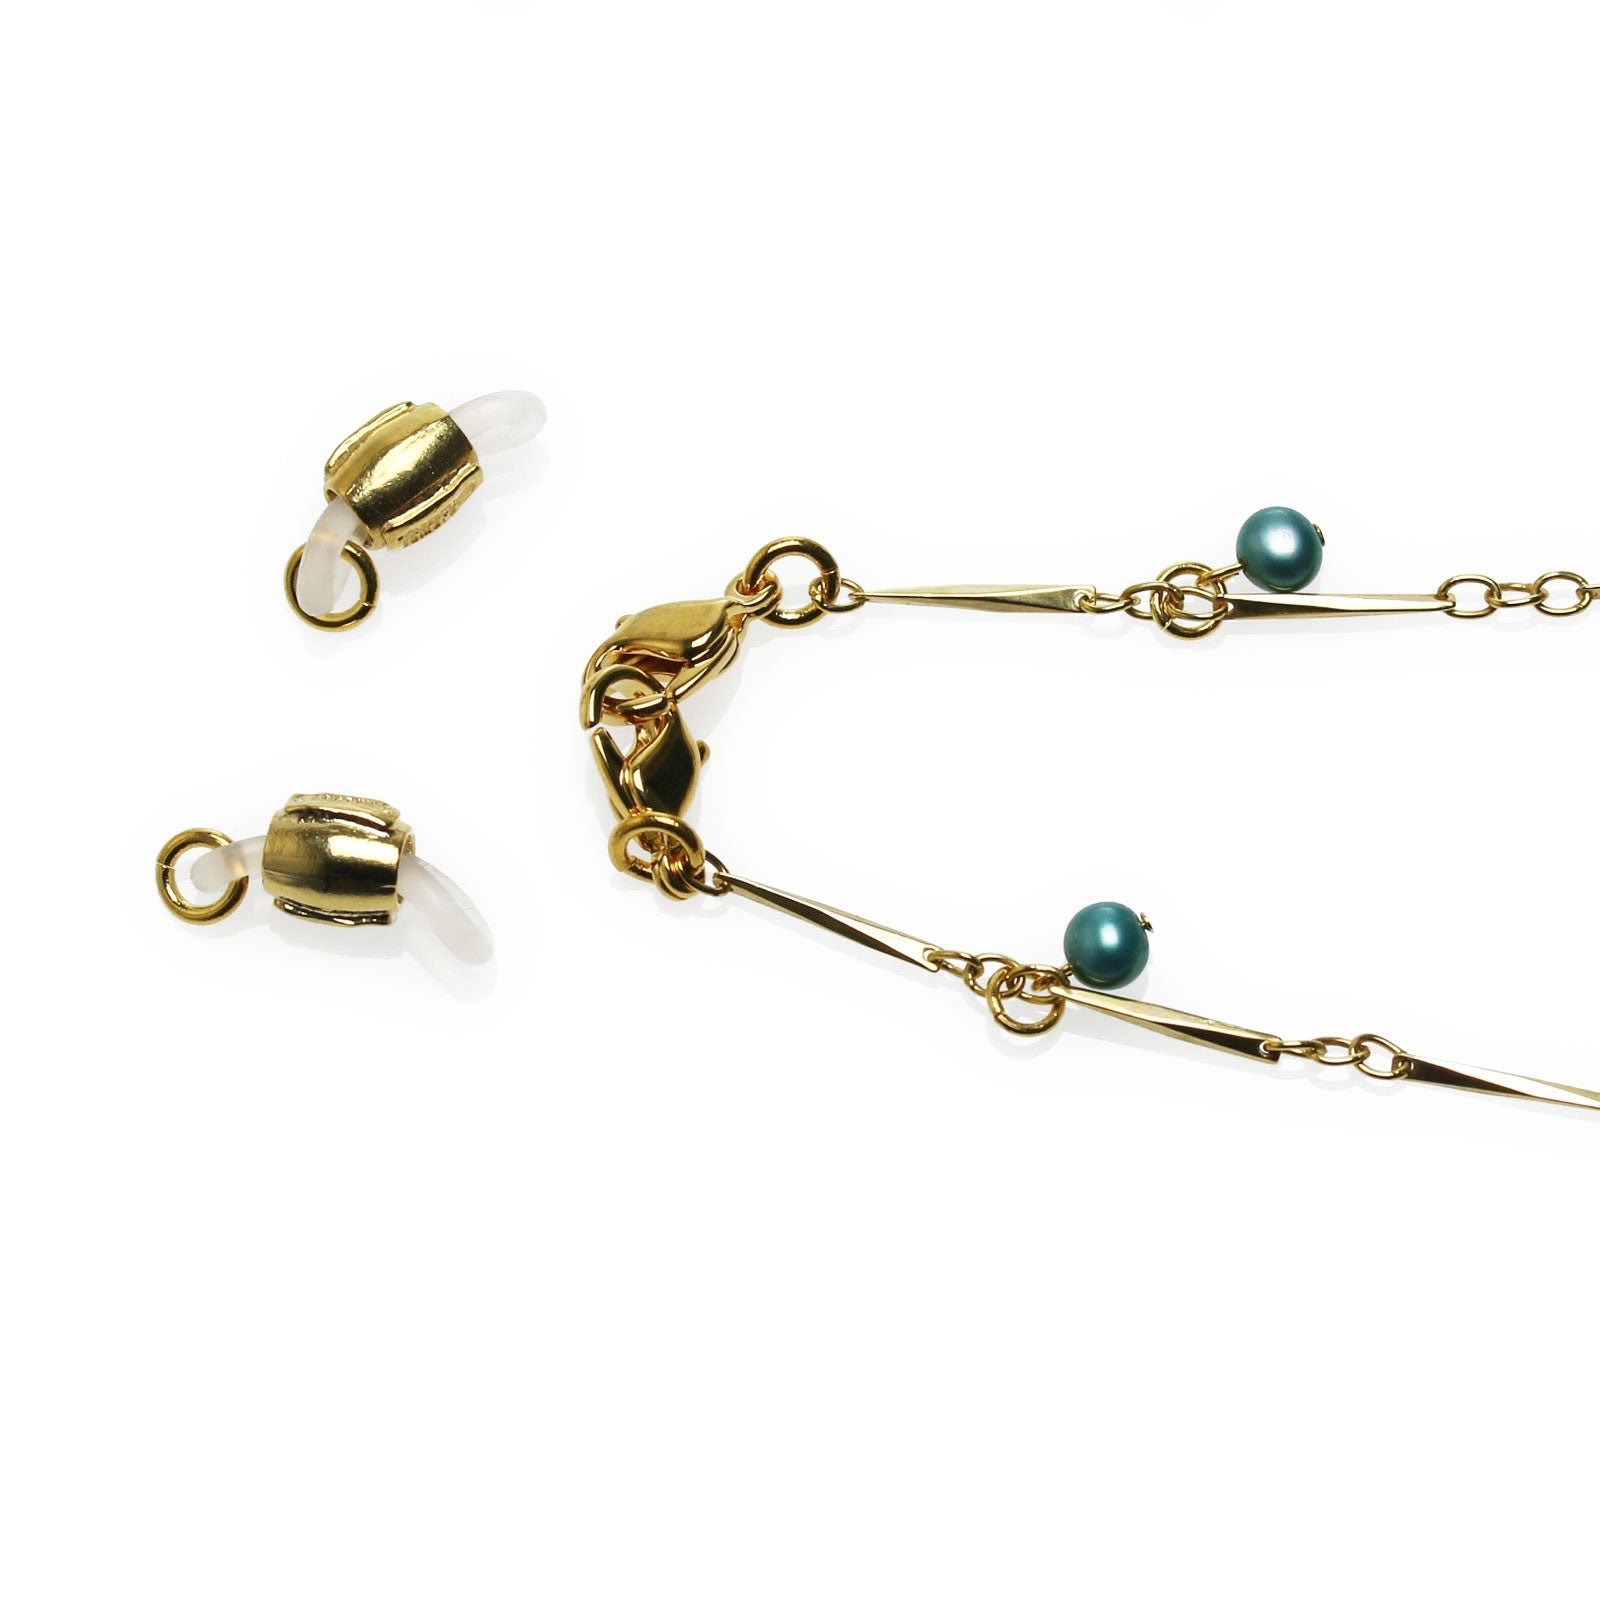 Eyeglass Chain Necklace Blue Leaves Gold Quartz TAMARUSAN